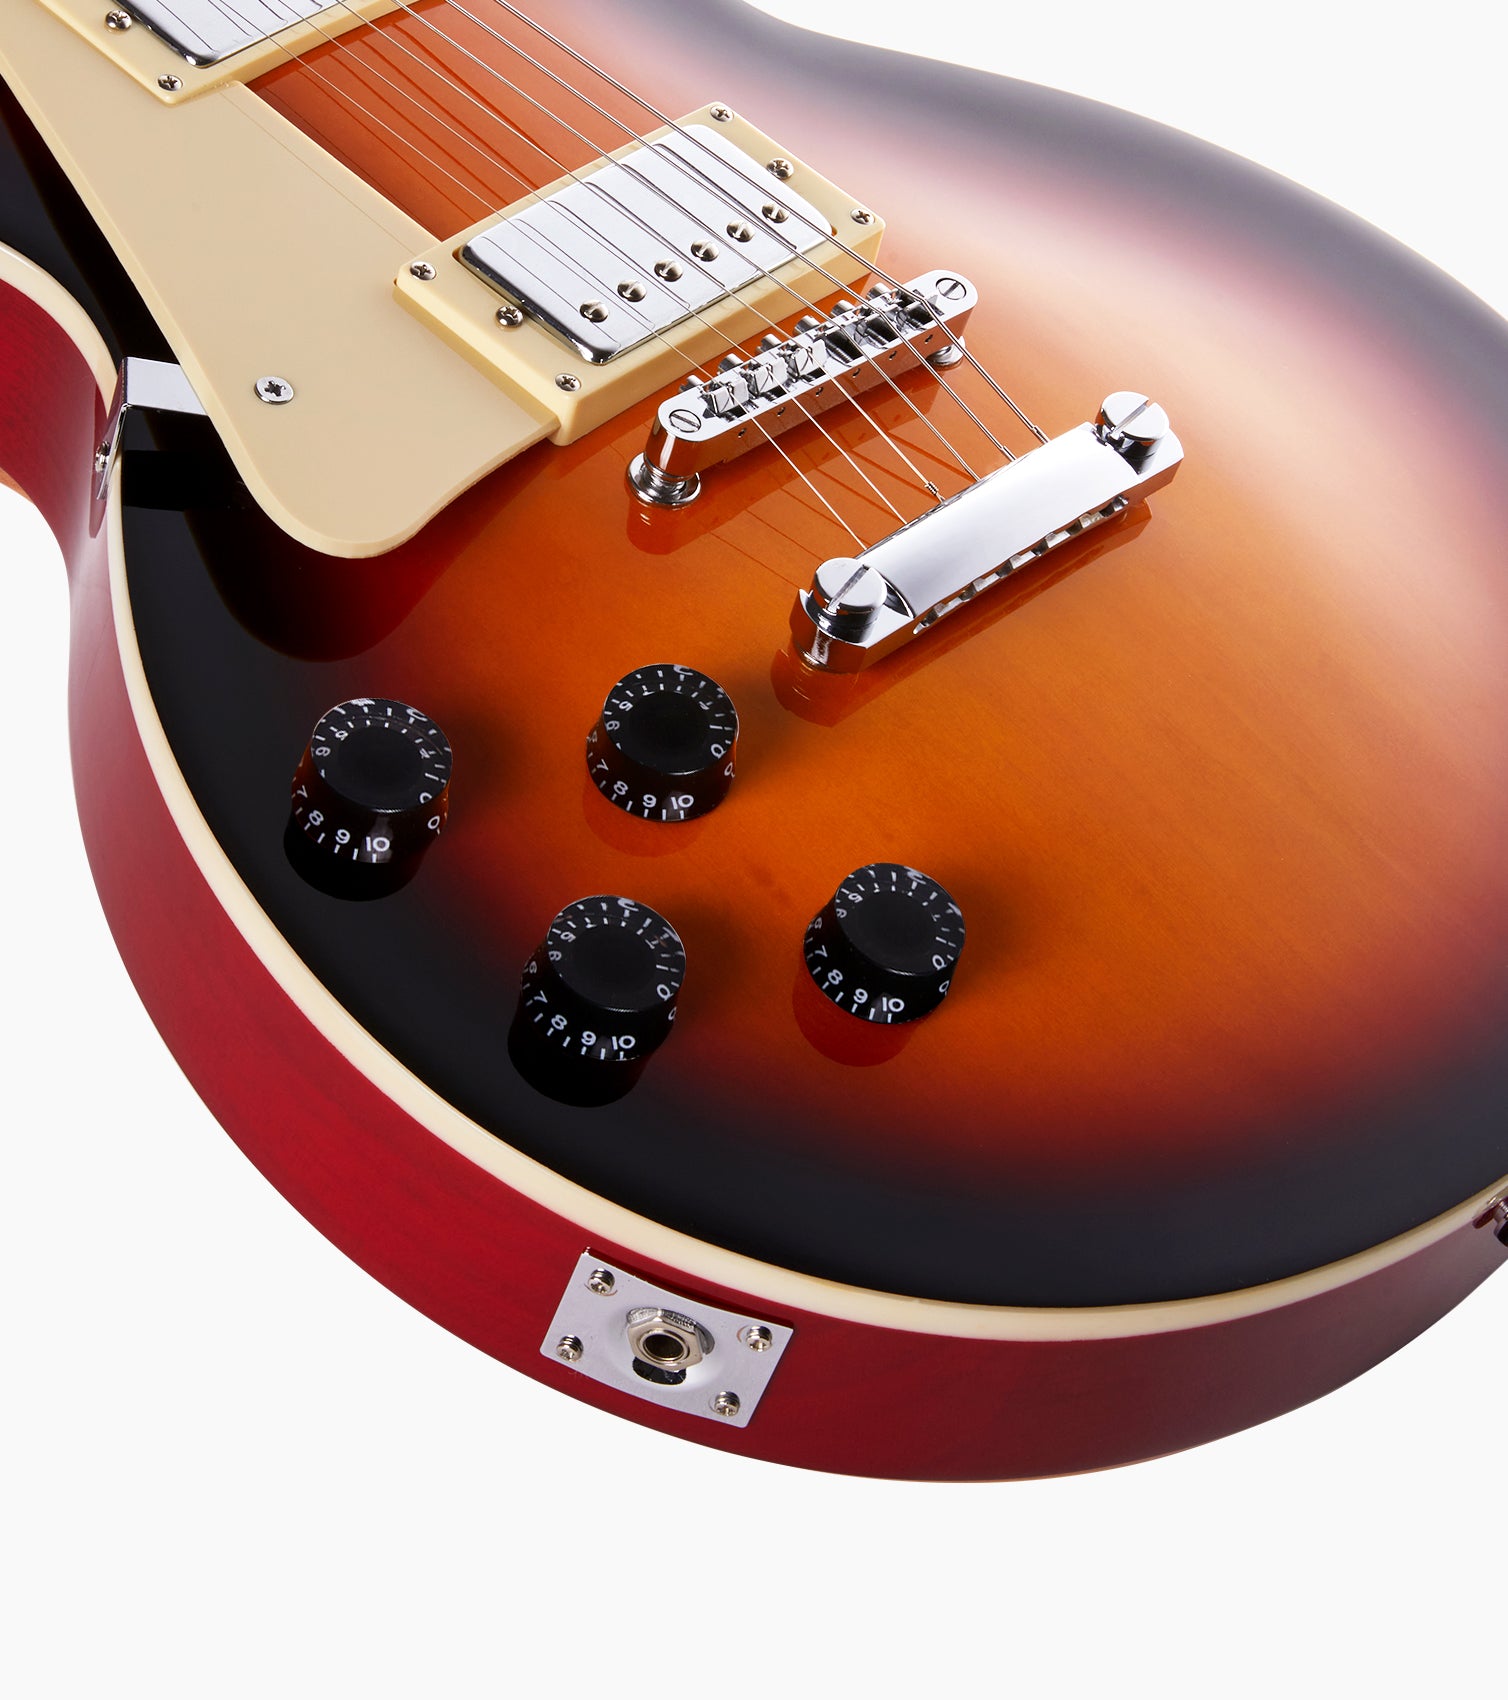 39 inch Left Handed Les Paul Electric Guitar Sunburst- Output Jack and controls